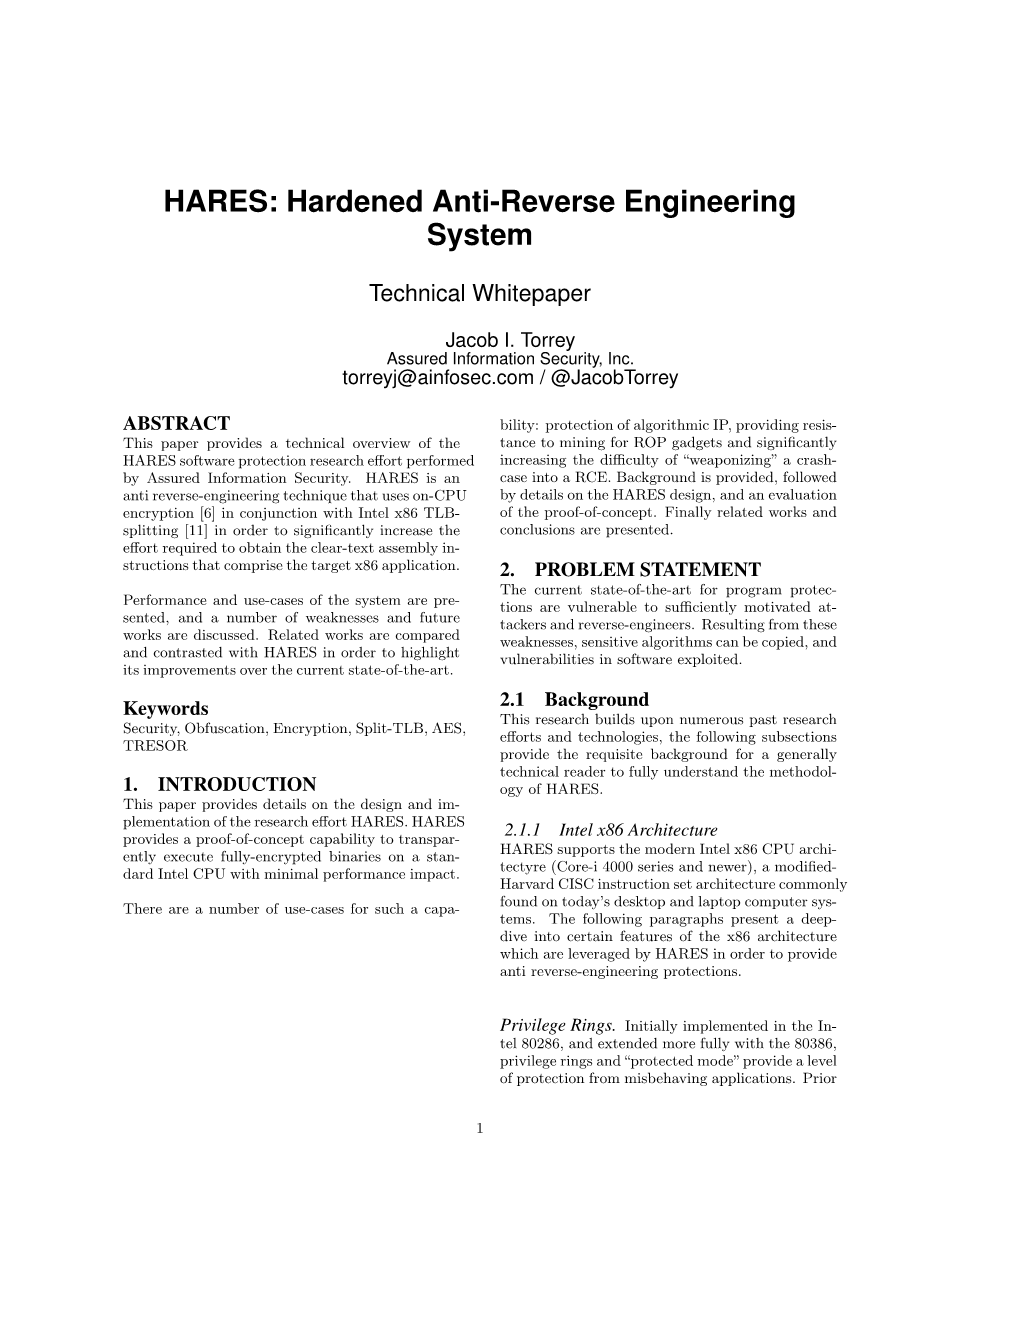 HARES: Hardened Anti-Reverse Engineering System